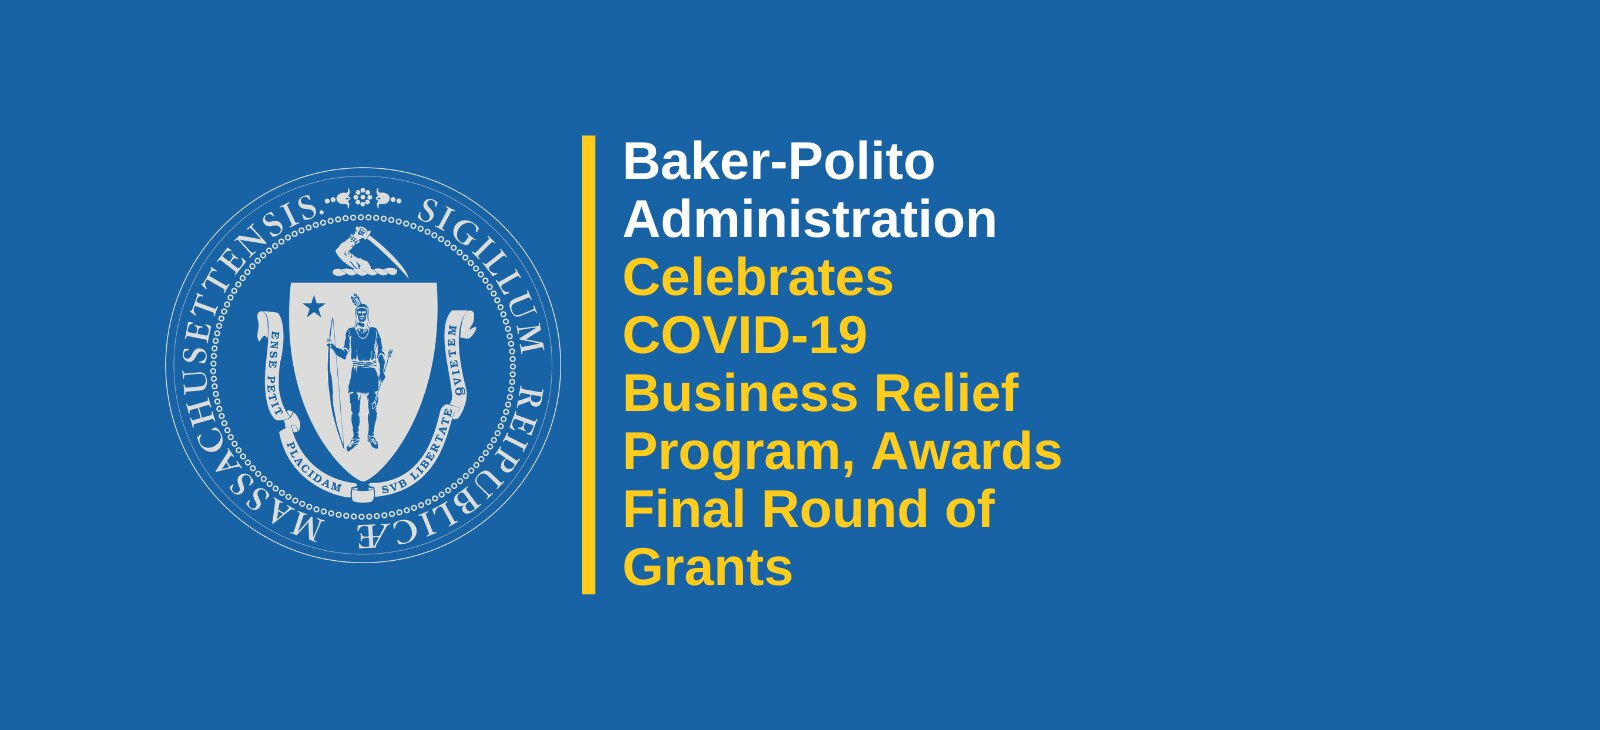 Baker-Polito Administration Celebrates COVID-19 Business Relief Program, Awards Final Round of Grants